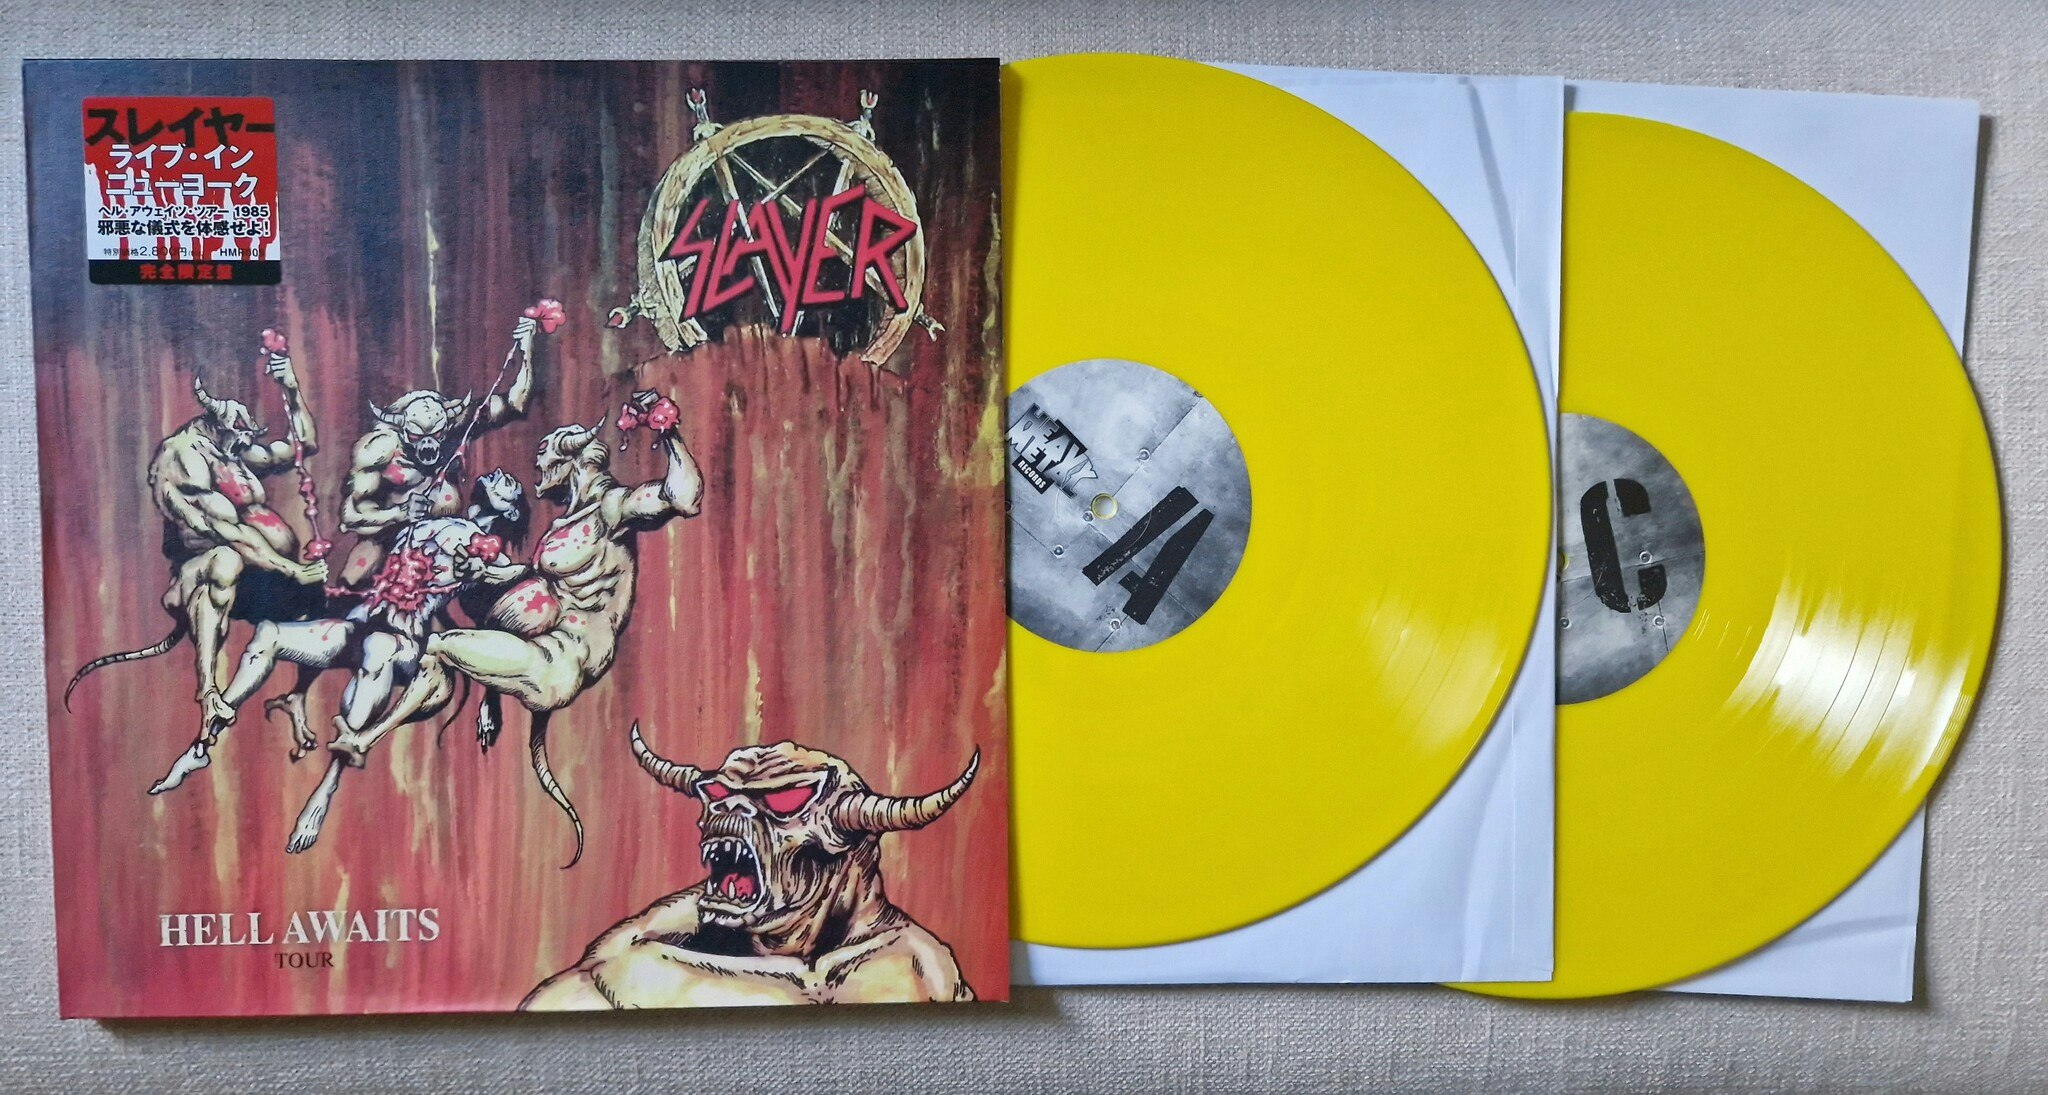 Slayer, Hell awaits tour. Vinyl 2LP